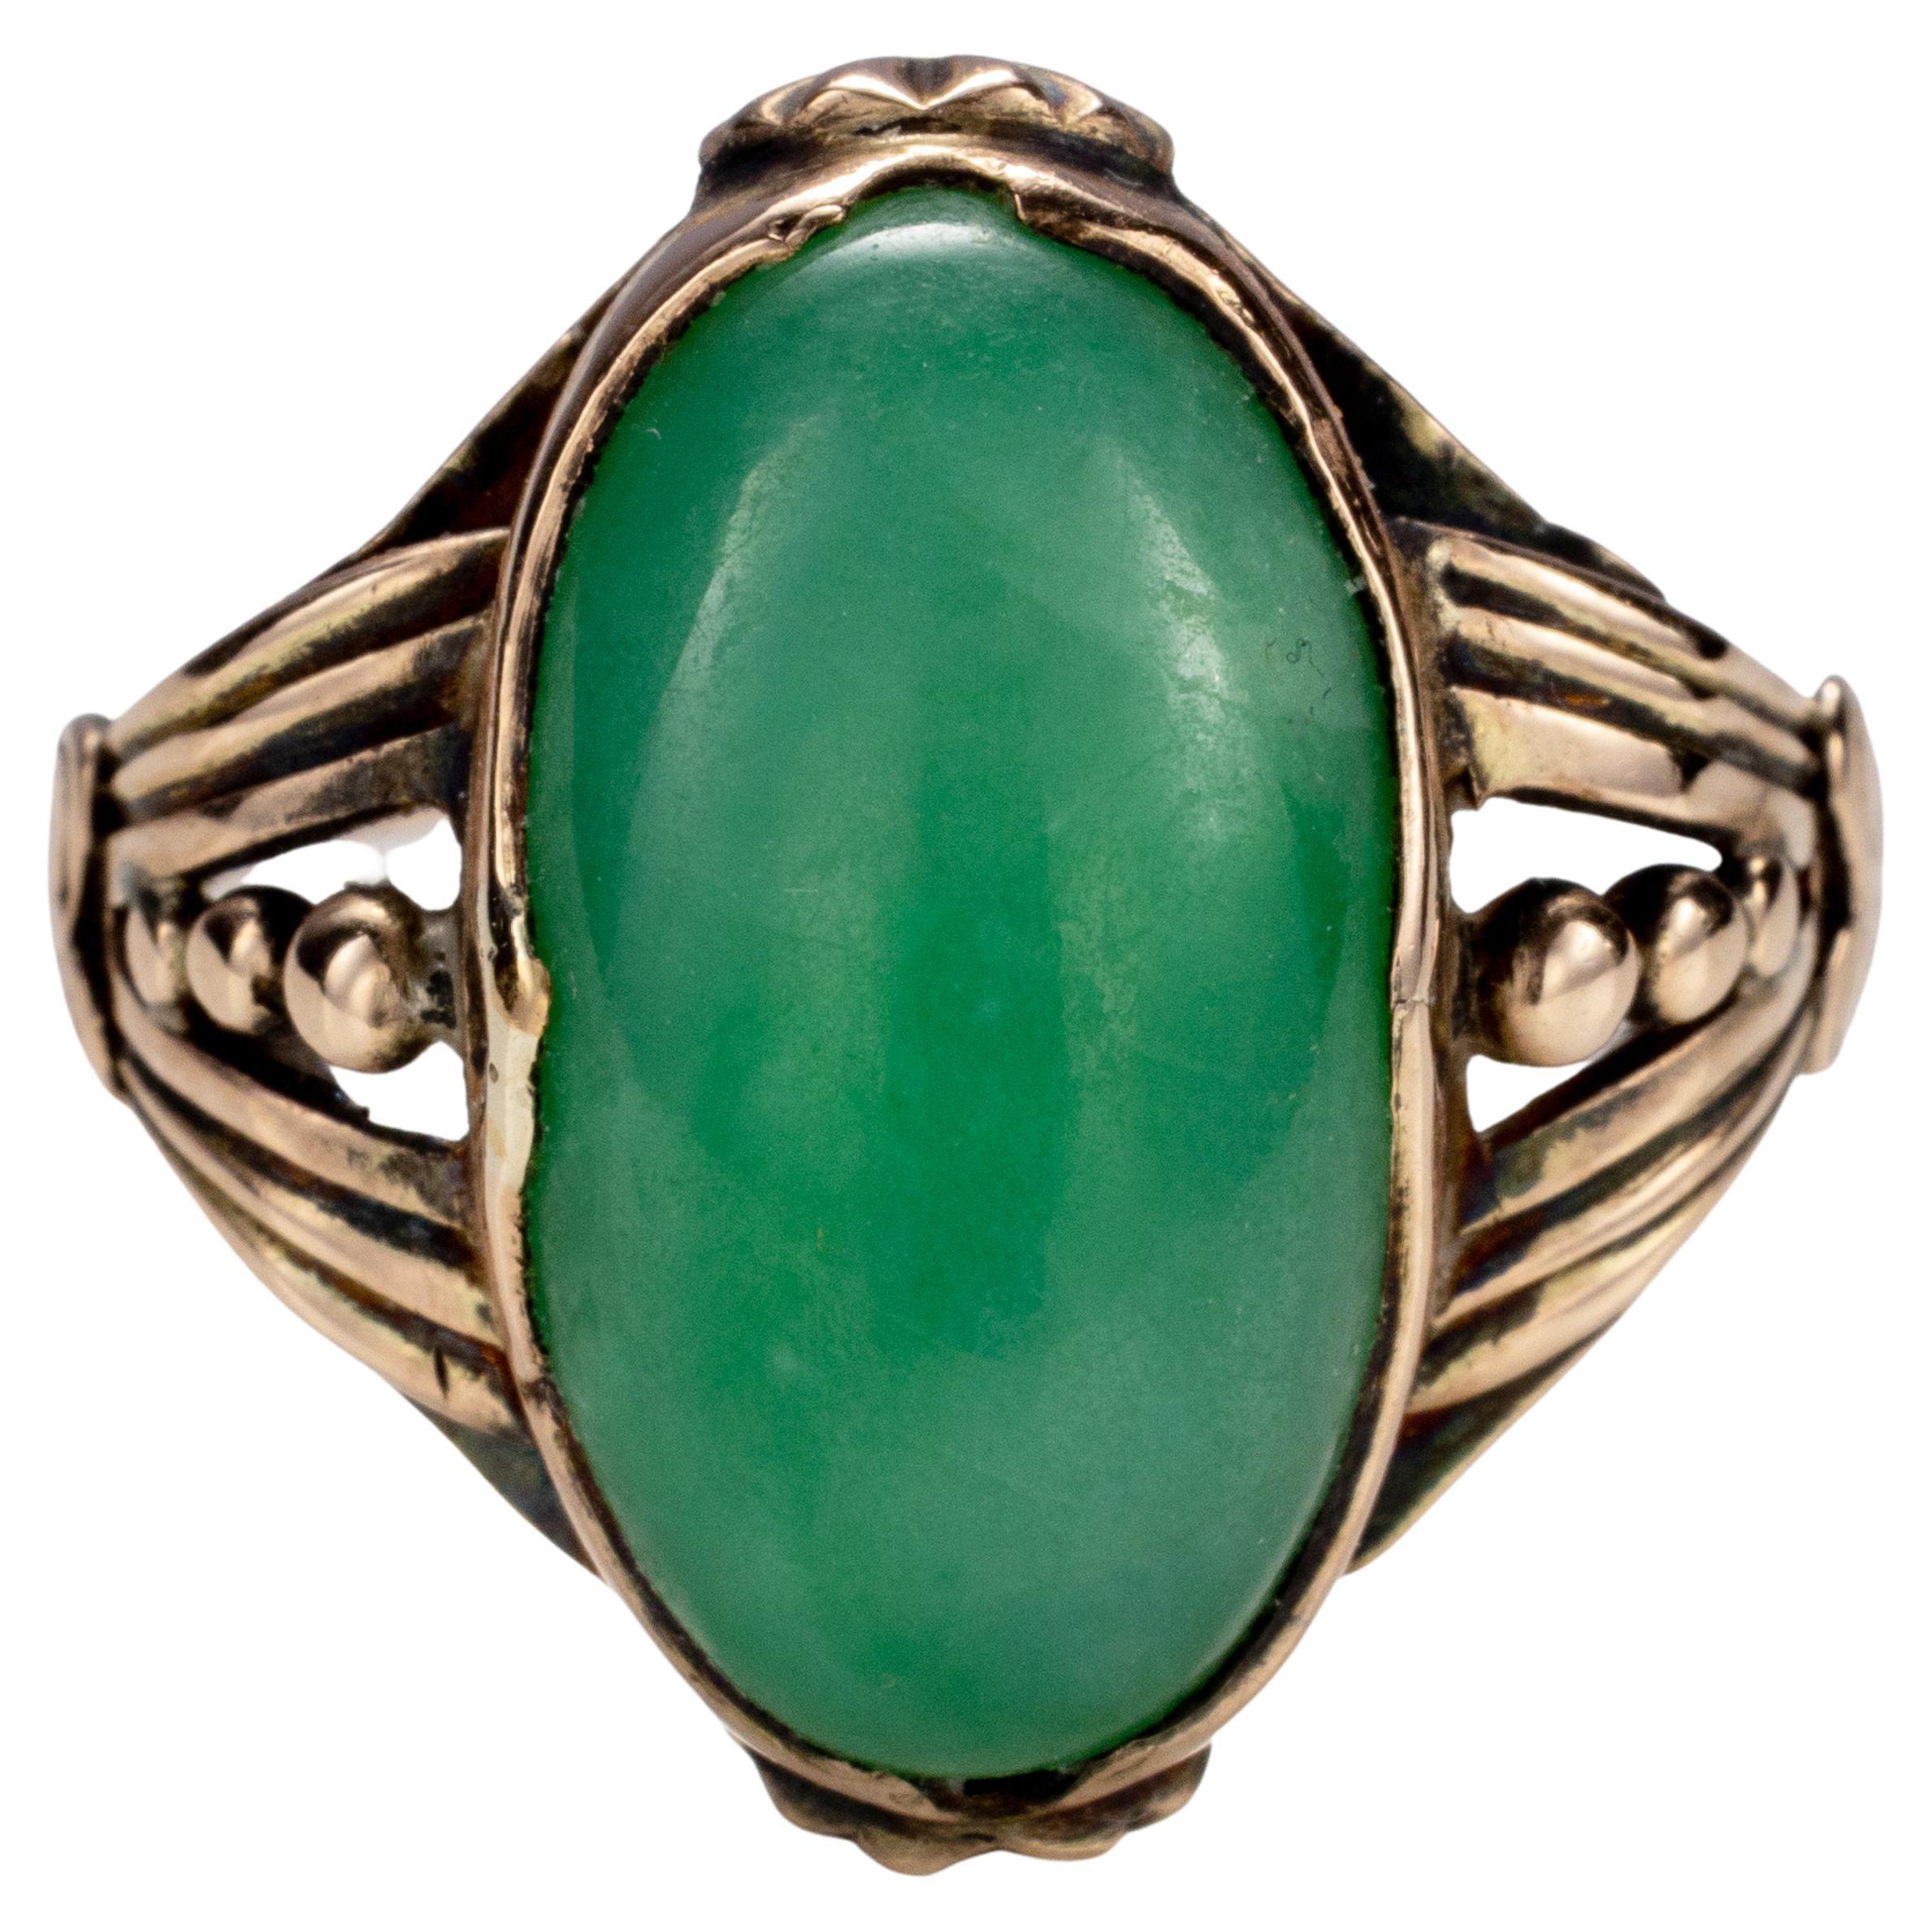 Art Nouveau Jadeite Jade Ring Certified Untreated